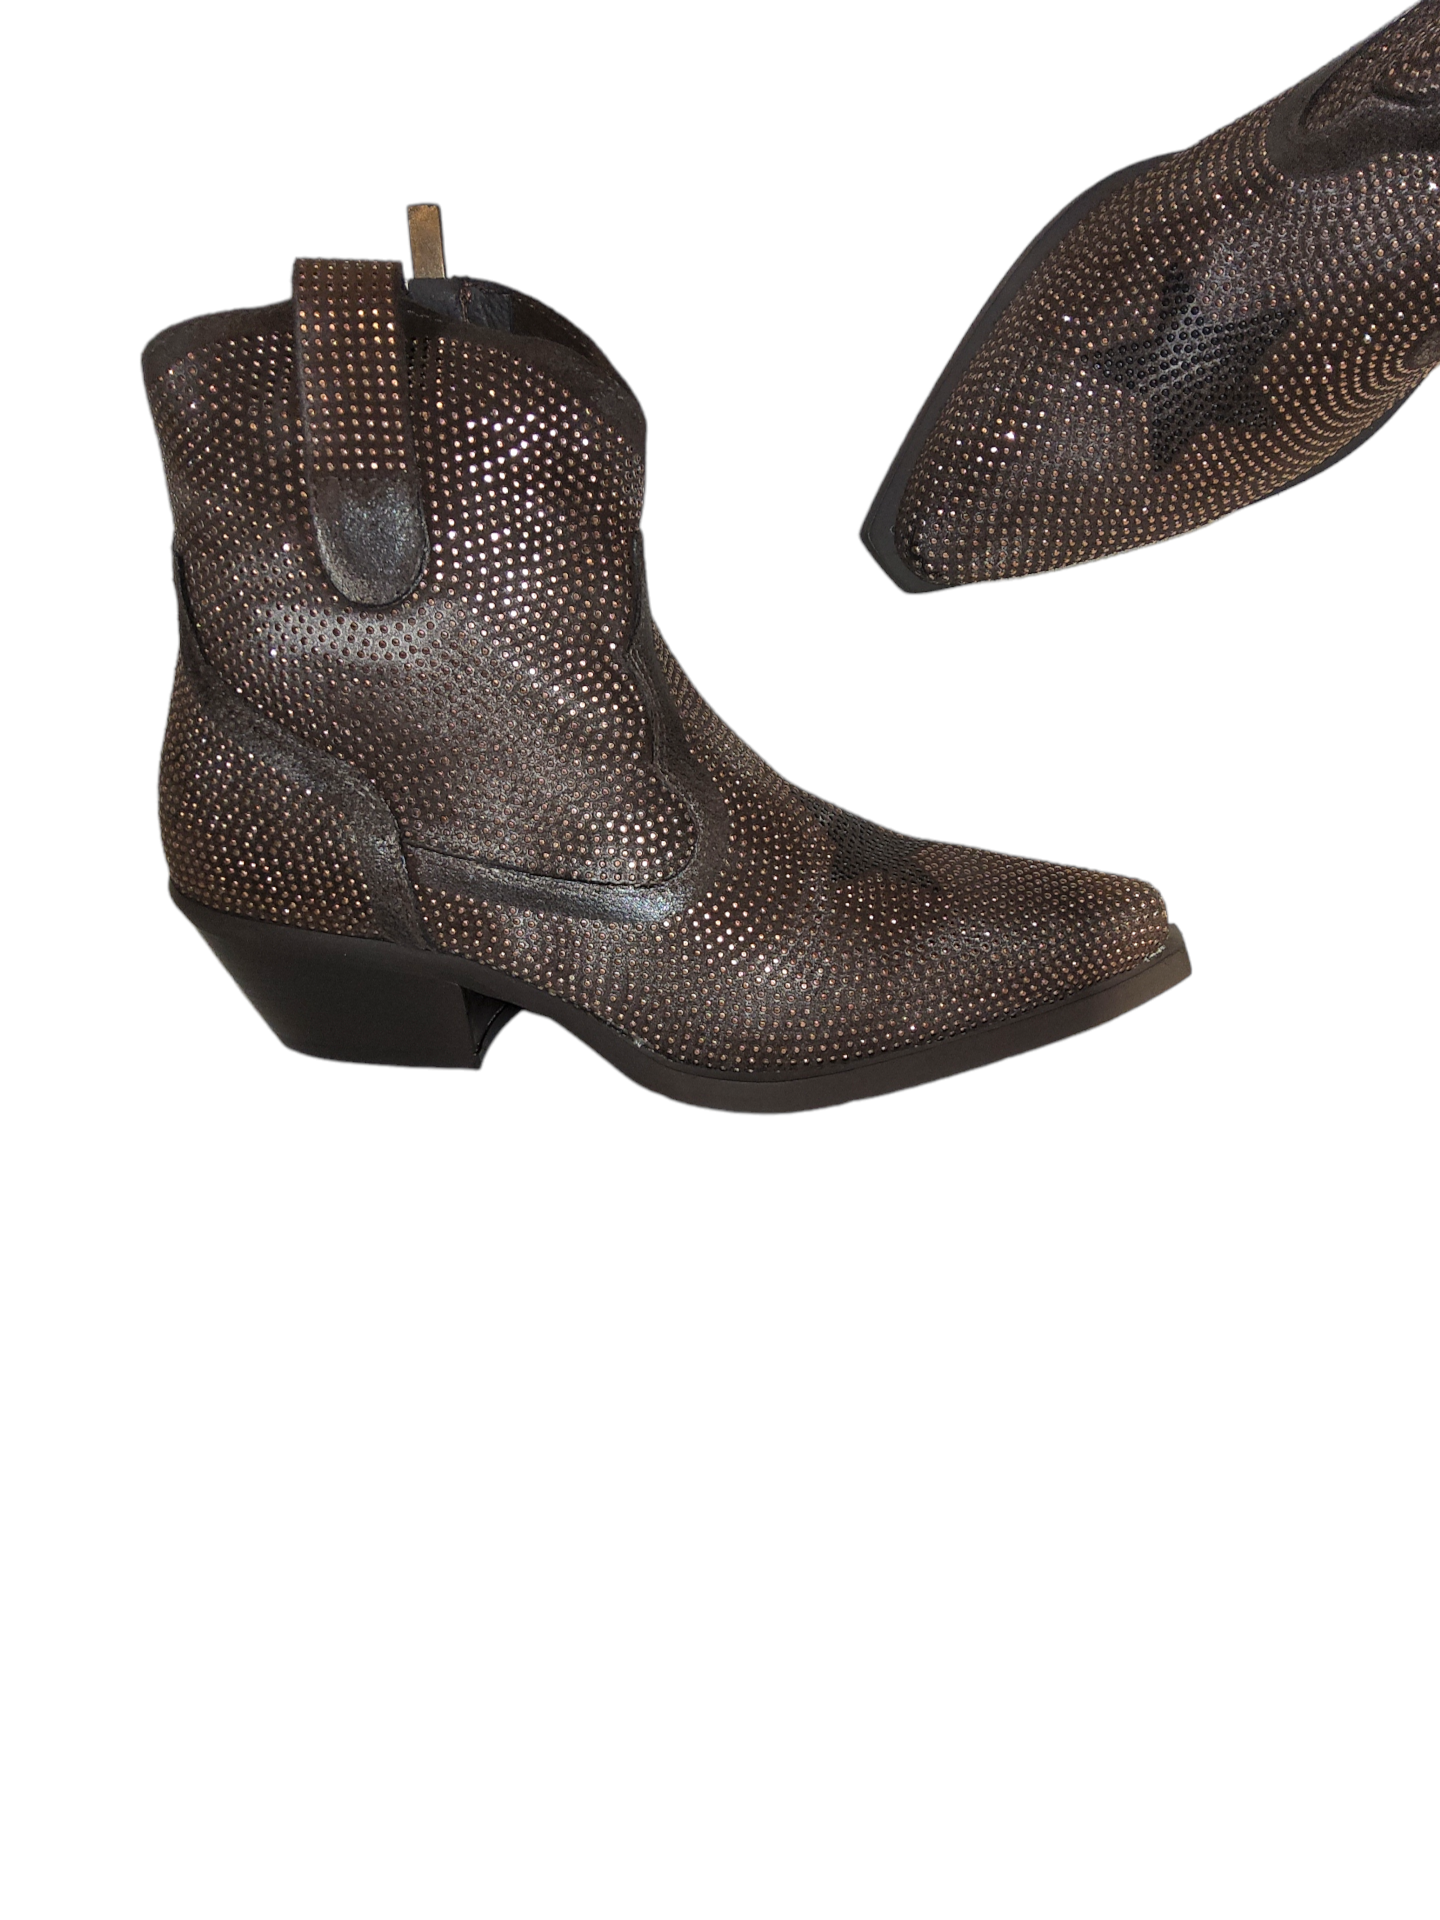 Stud Embellishment cowboy boots